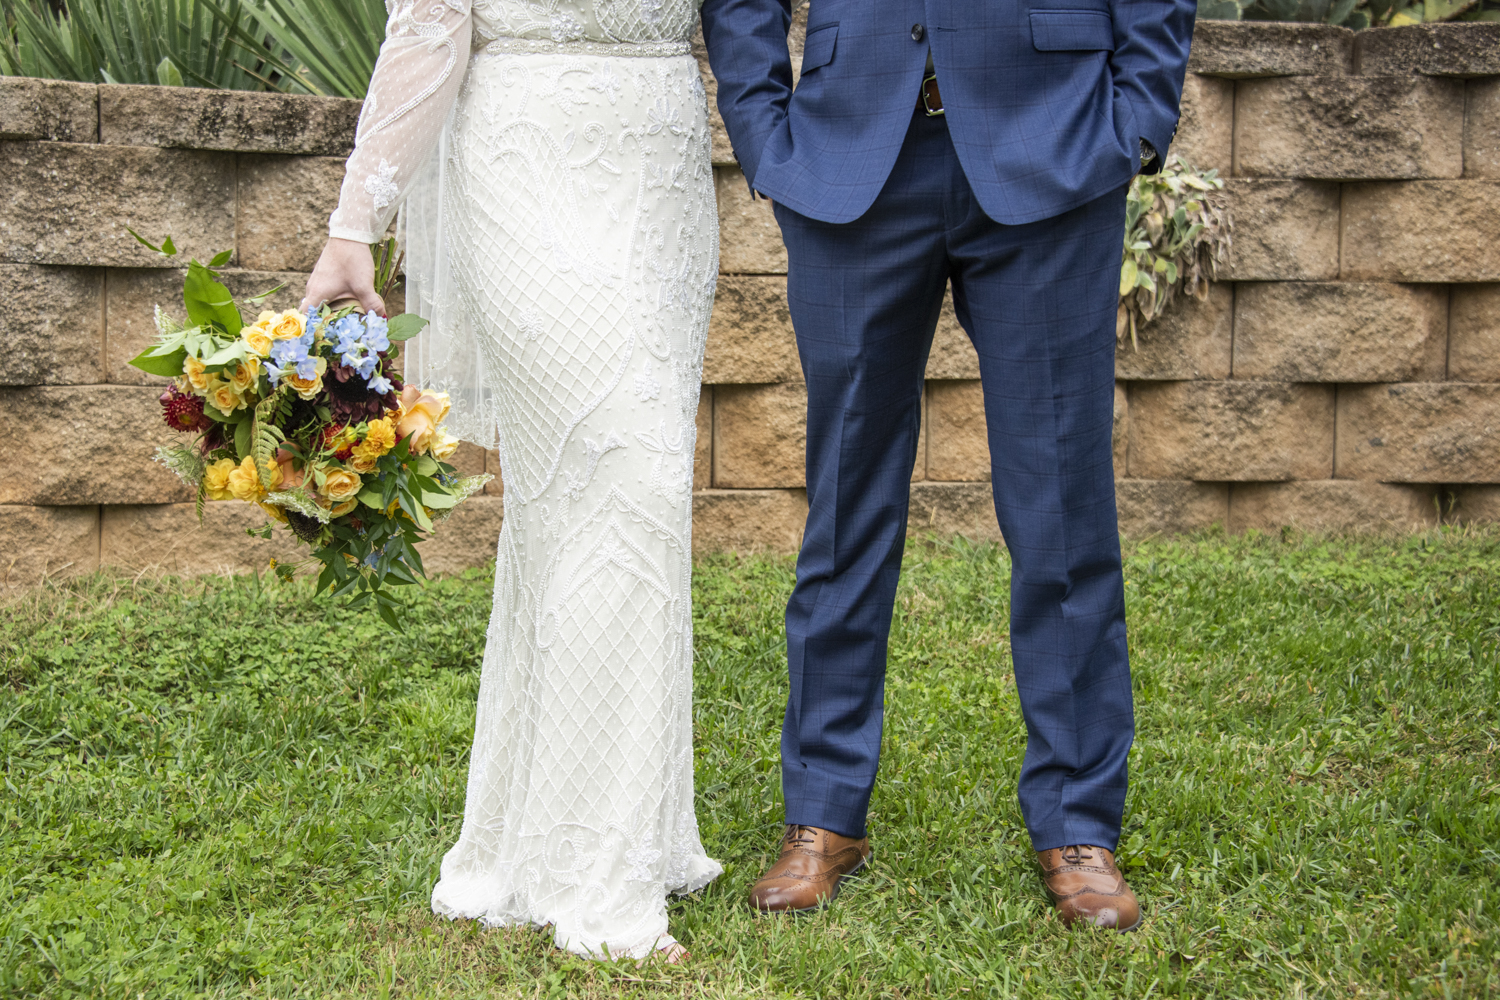 Wedding attire at Asheville wedding chapel photography